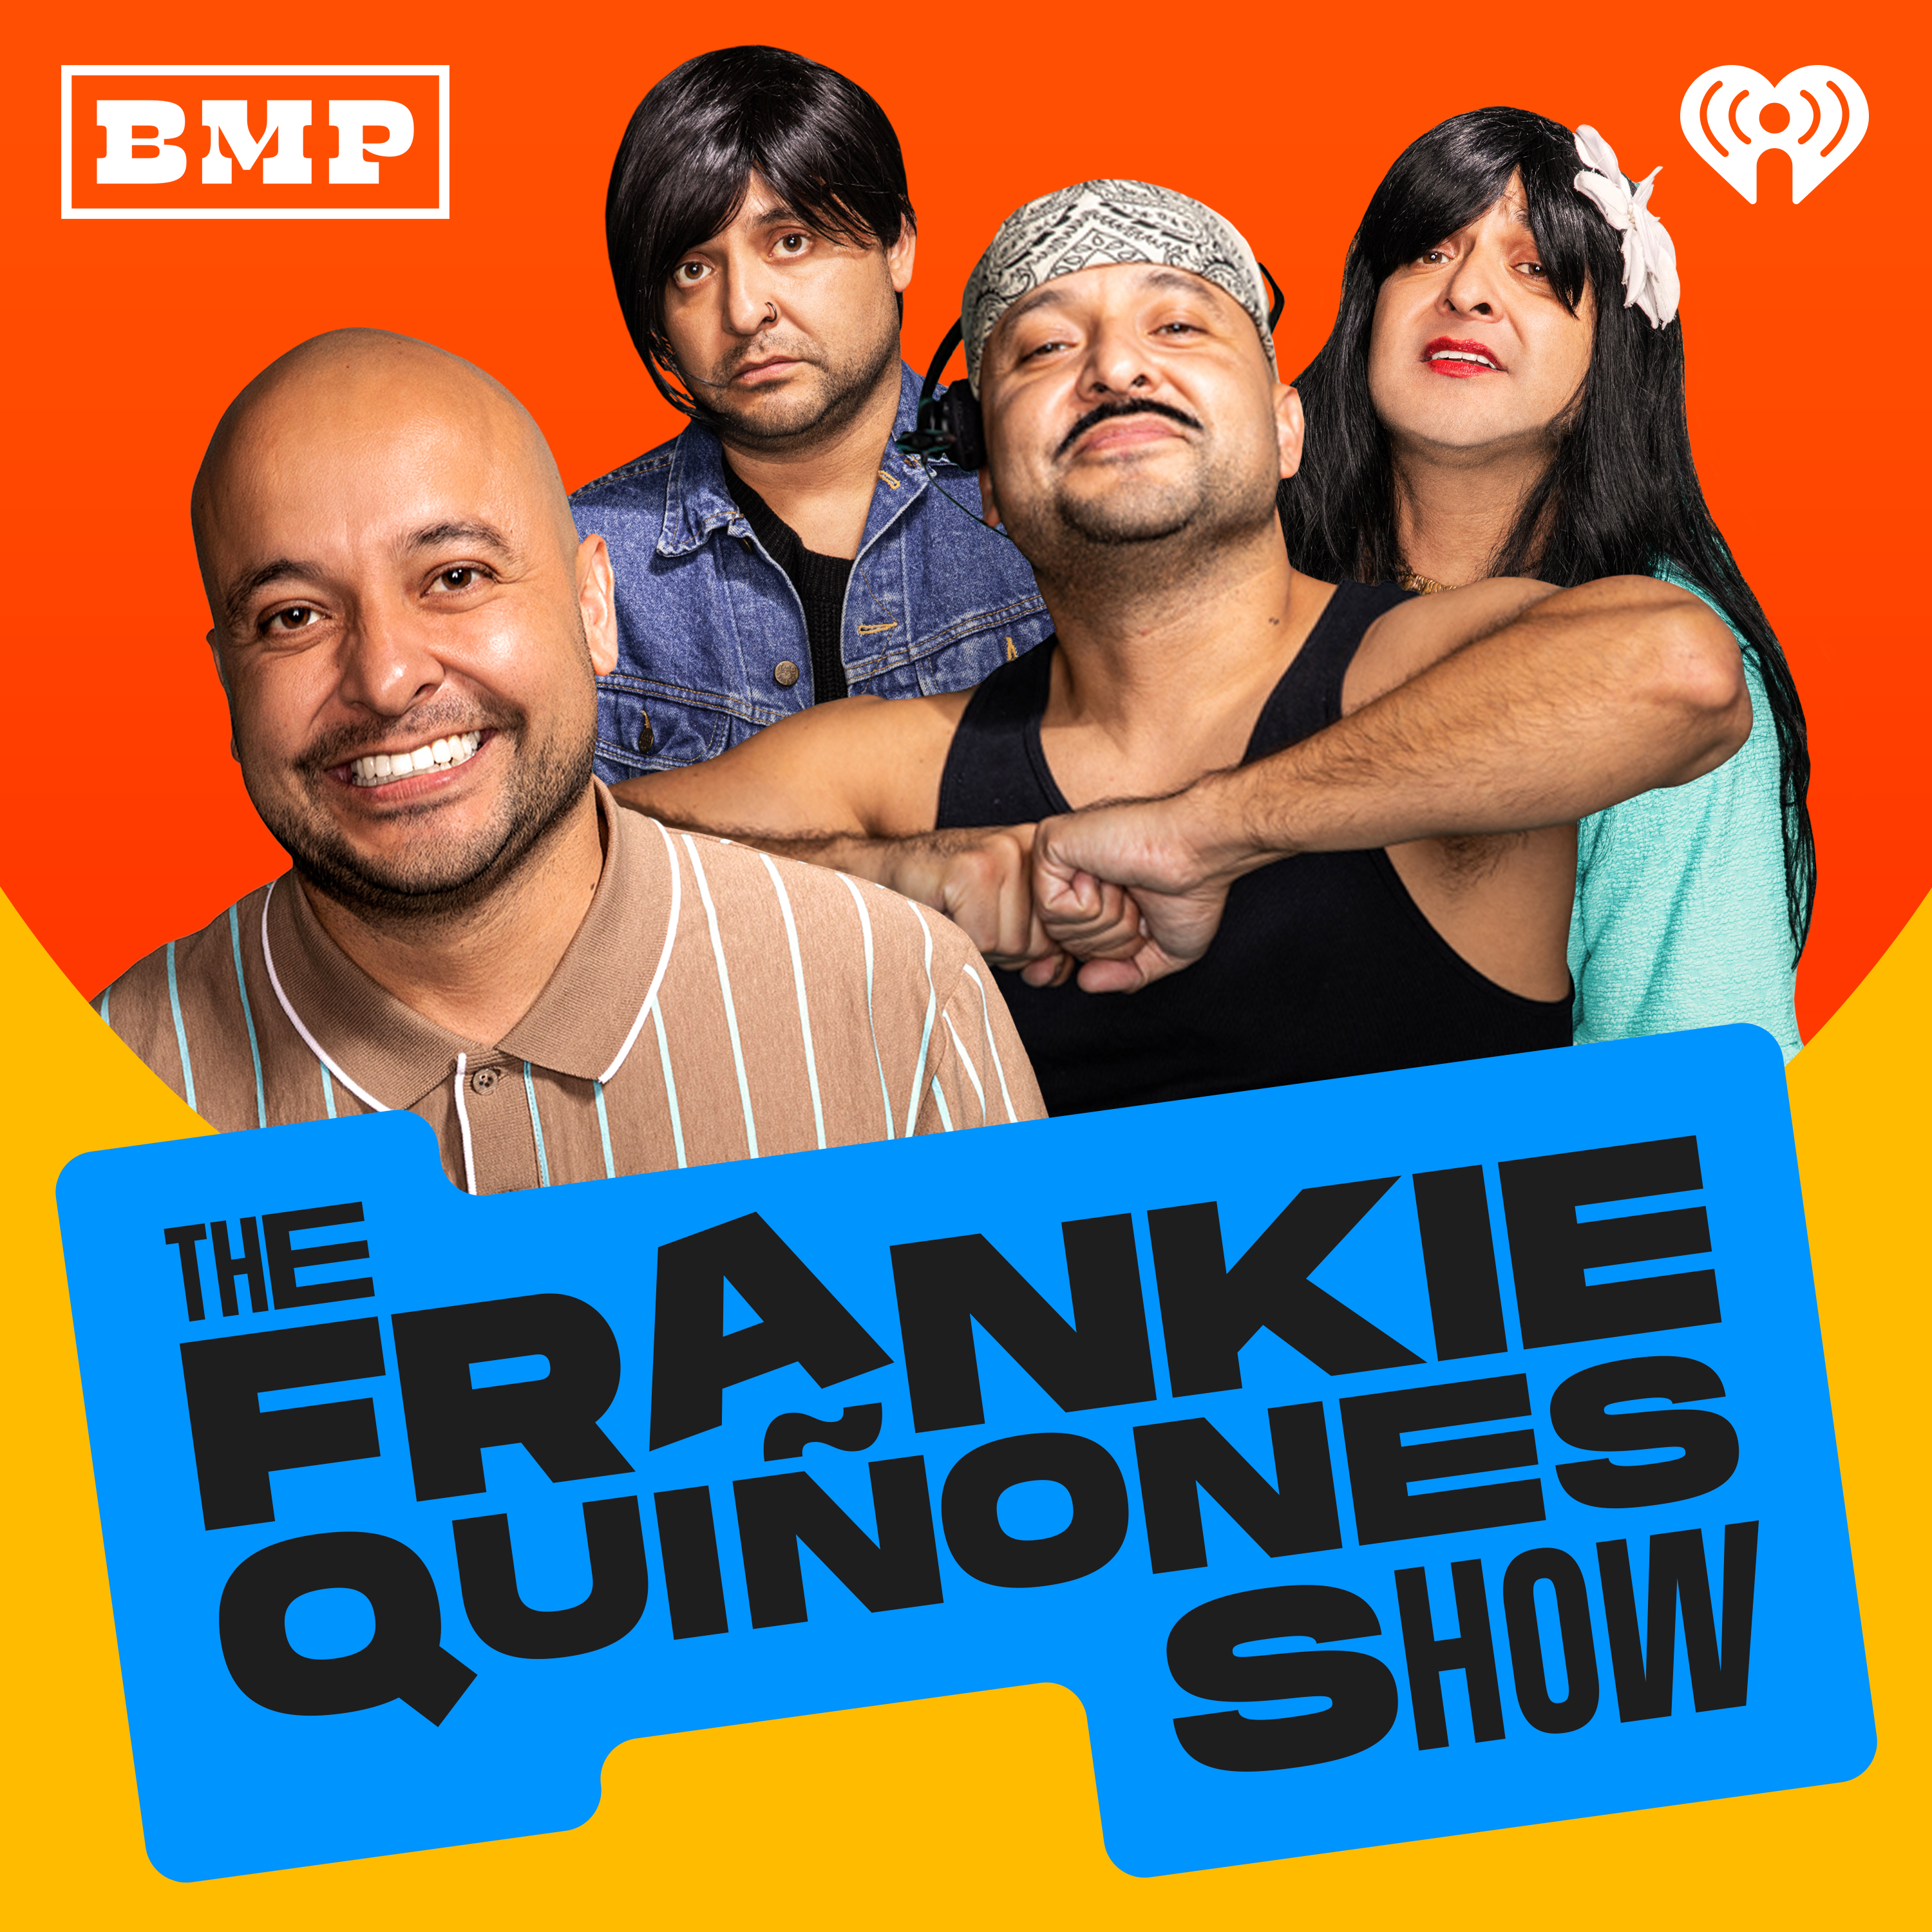 The Frankie Quiñones Show Returns!